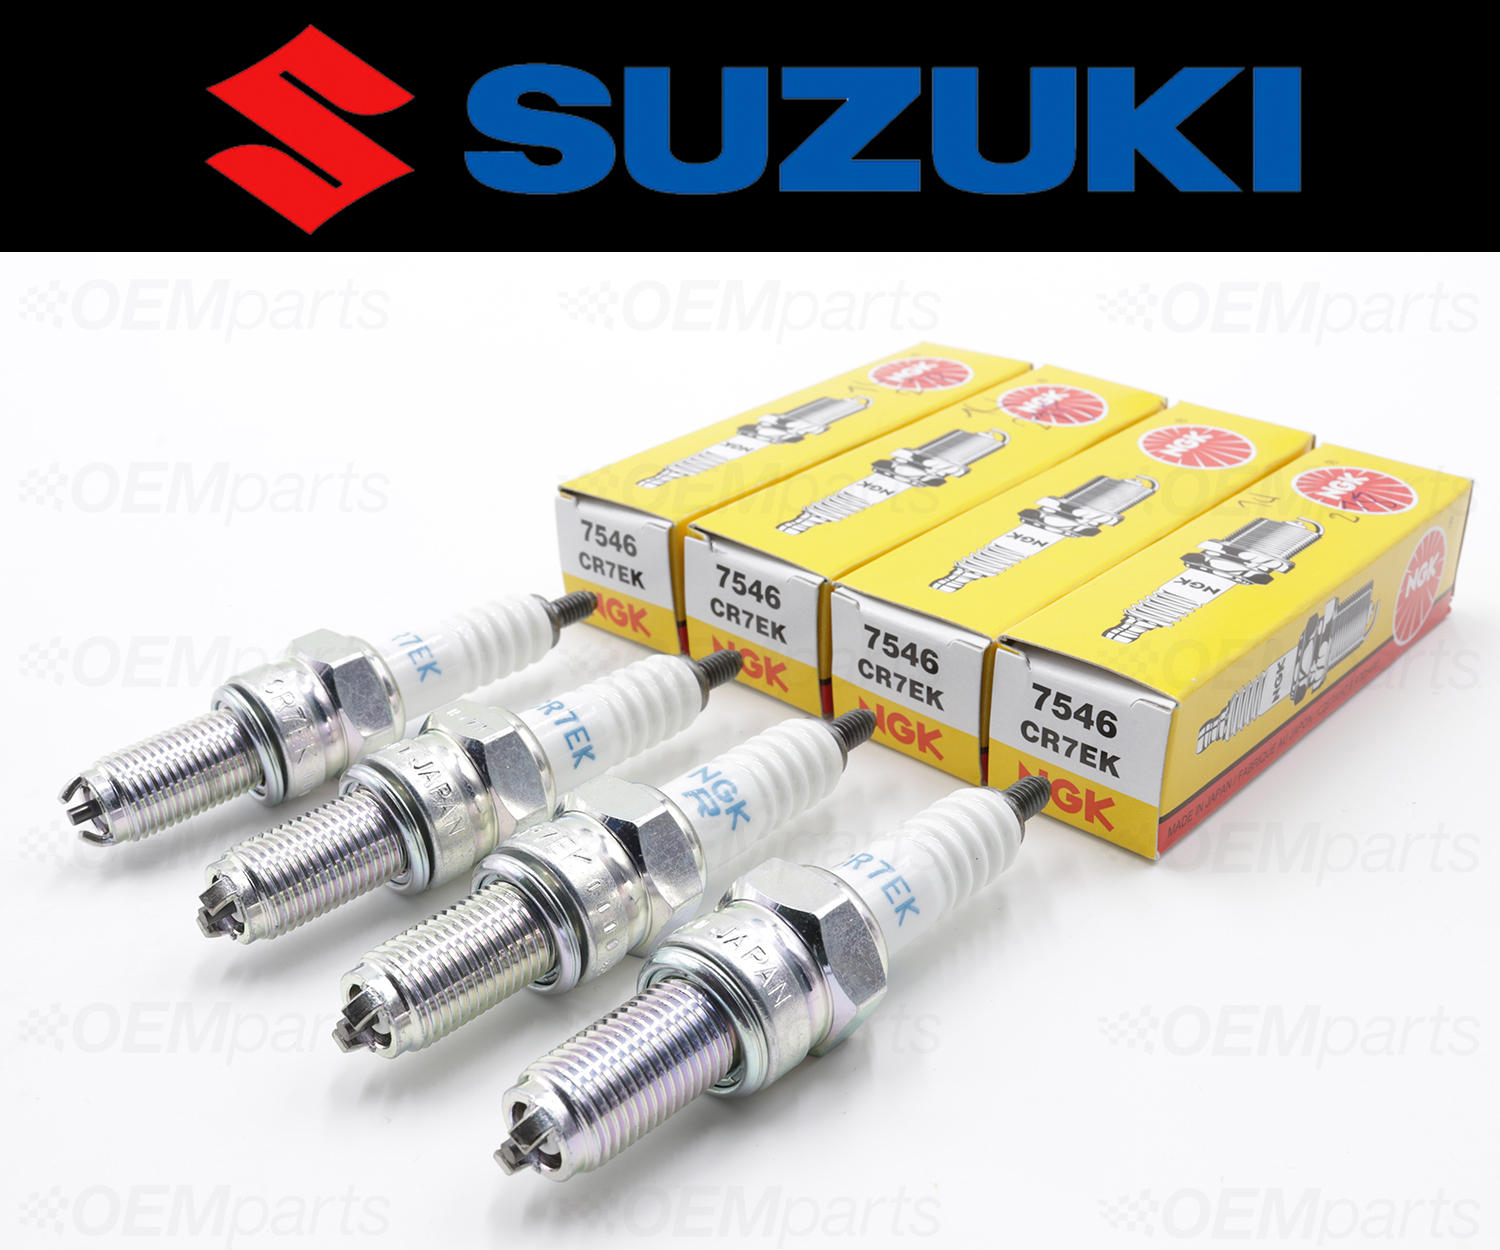 Pack of 1 CR7EK Standard Spark Plug 7546 NGK